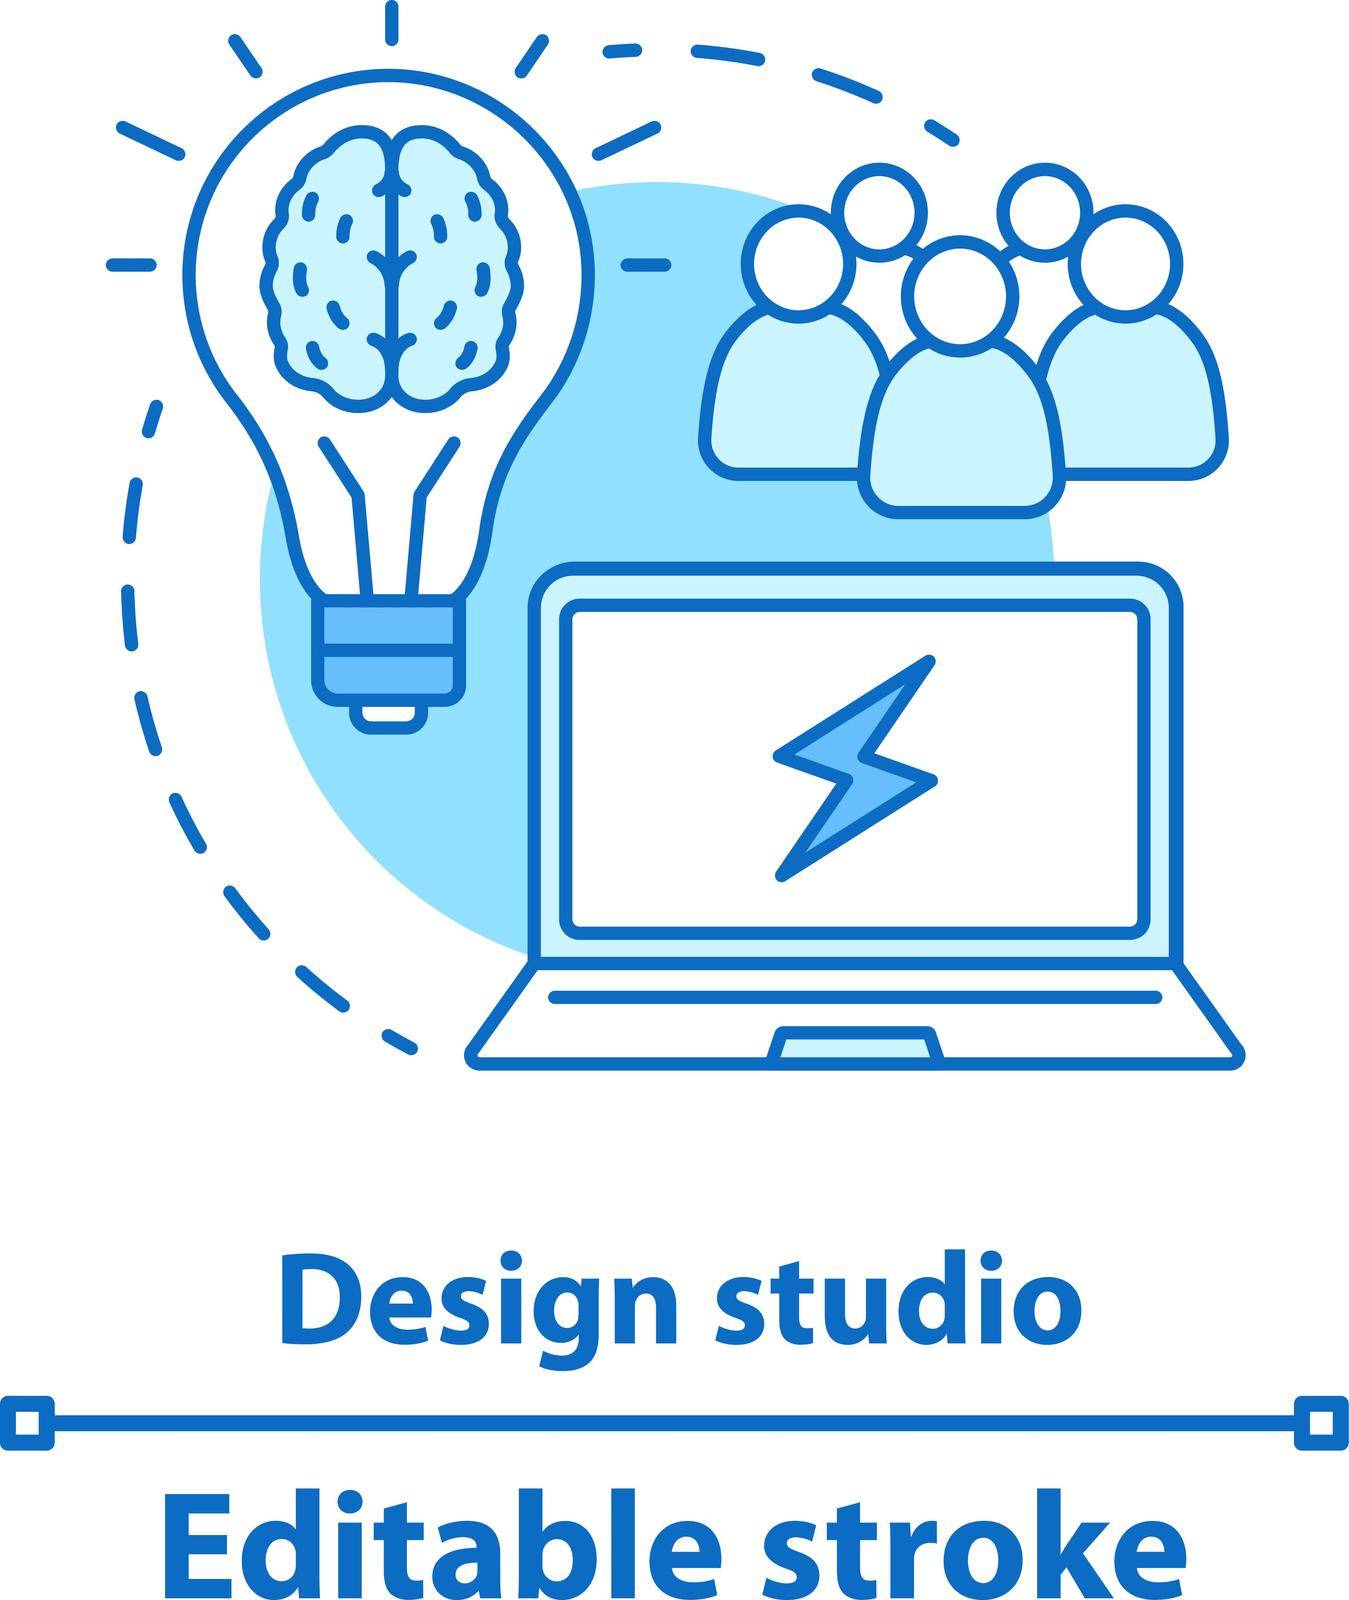 Design studio concept icon. Team creativity idea thin line illustration. Idea generation. Teamwork. Brainstorm. Vector isolated outline drawing. Editable stroke